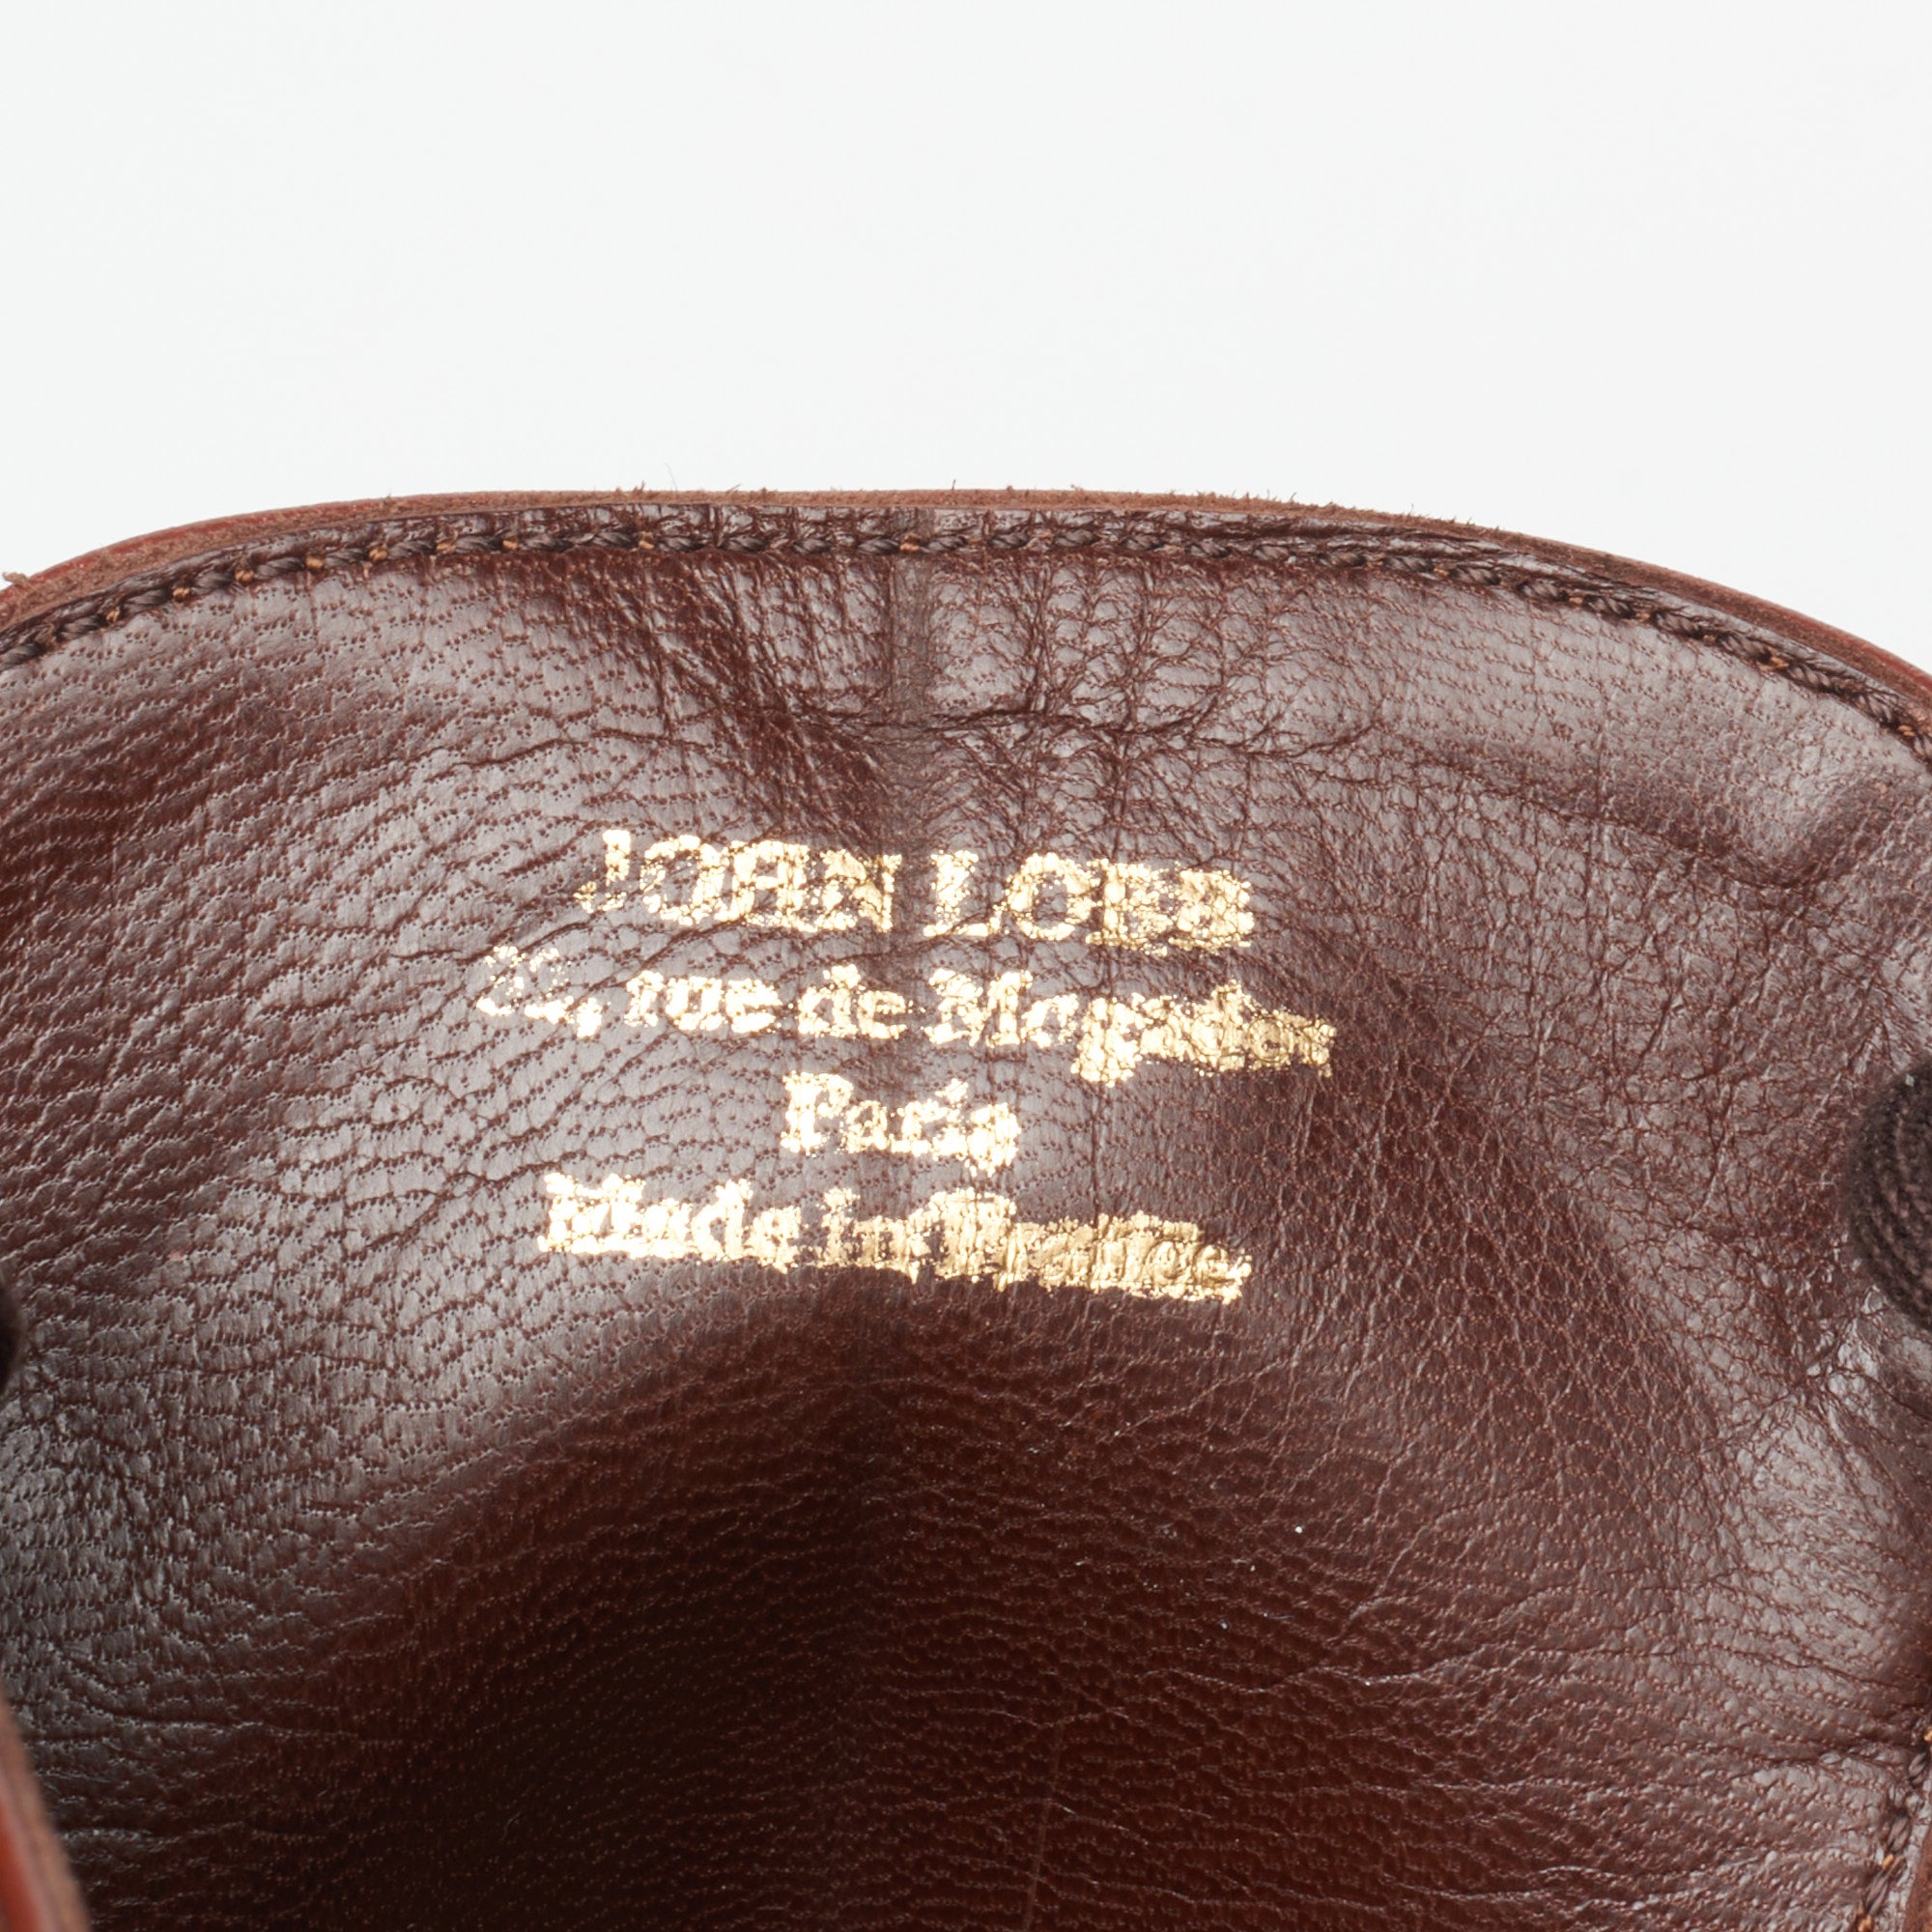 JOHN LOBB Paris Bespoke Brown Calf Leather 2 Eyelet Derby Shoes UK 7.5 US 8.5 JOHN LOBB